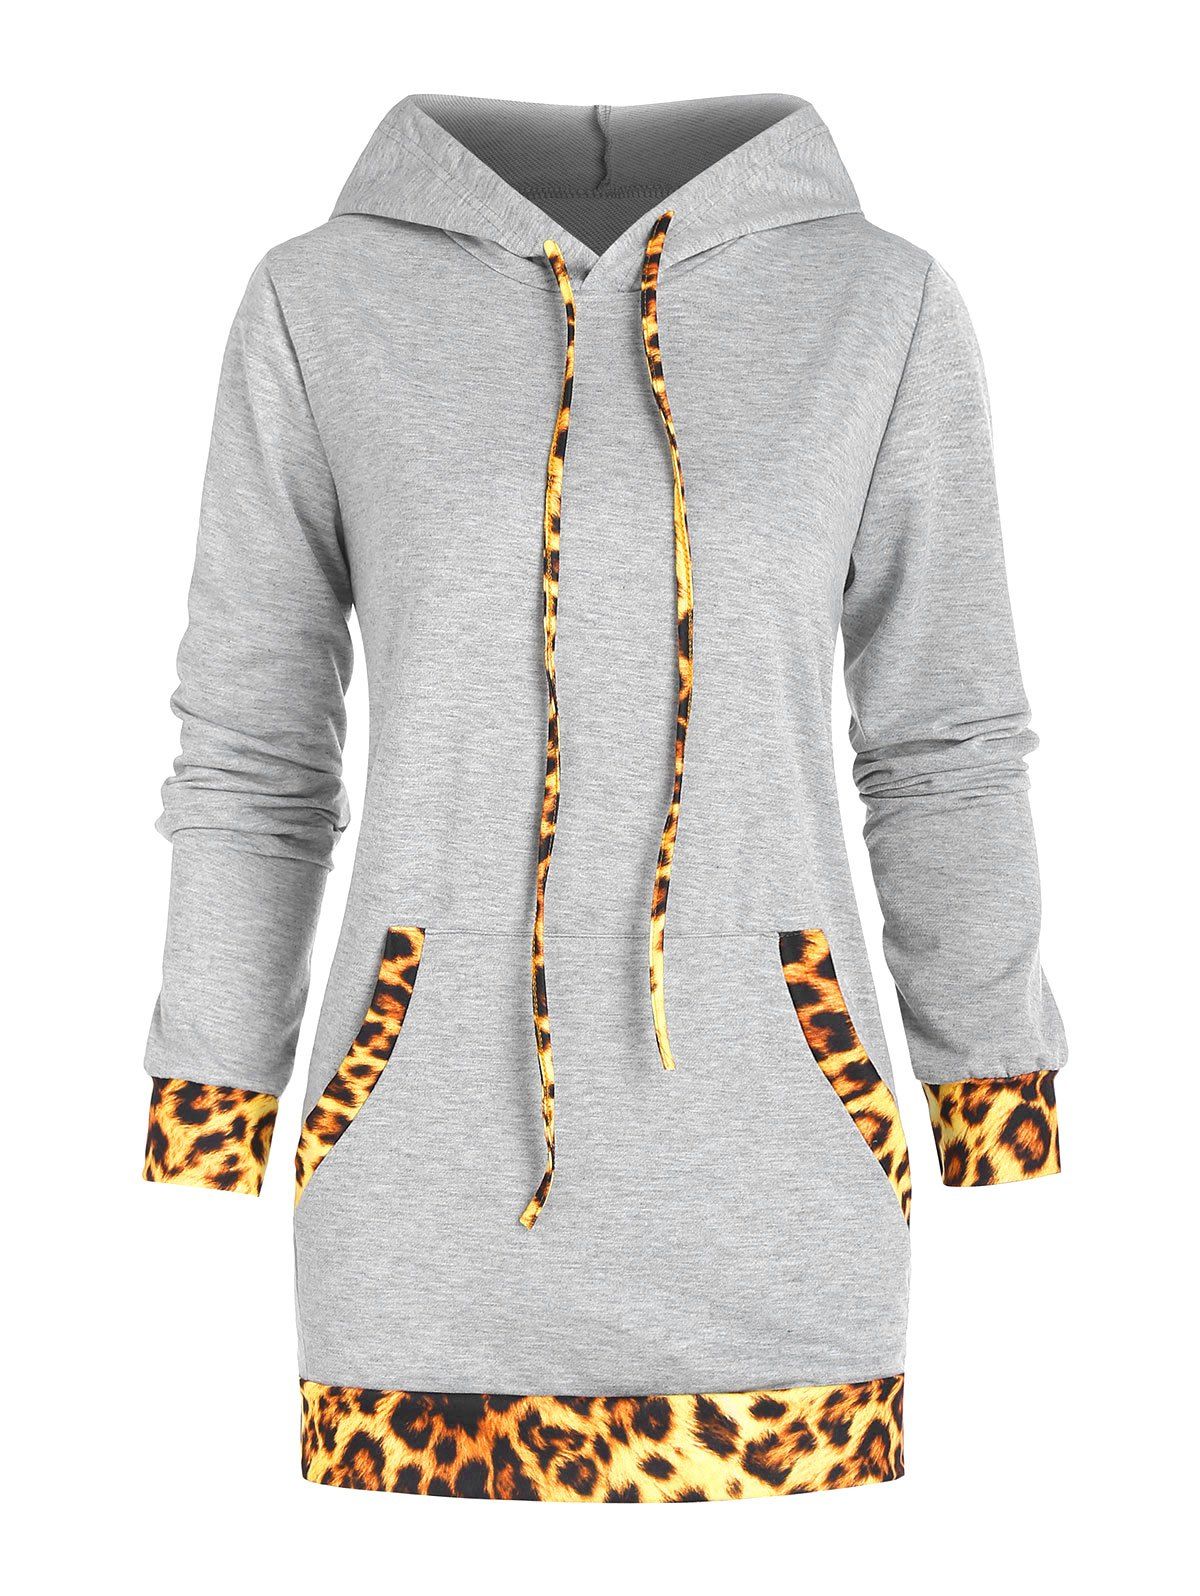 Leopard Kangaroo Pocket Hoodie Dress - LIGHT GRAY L